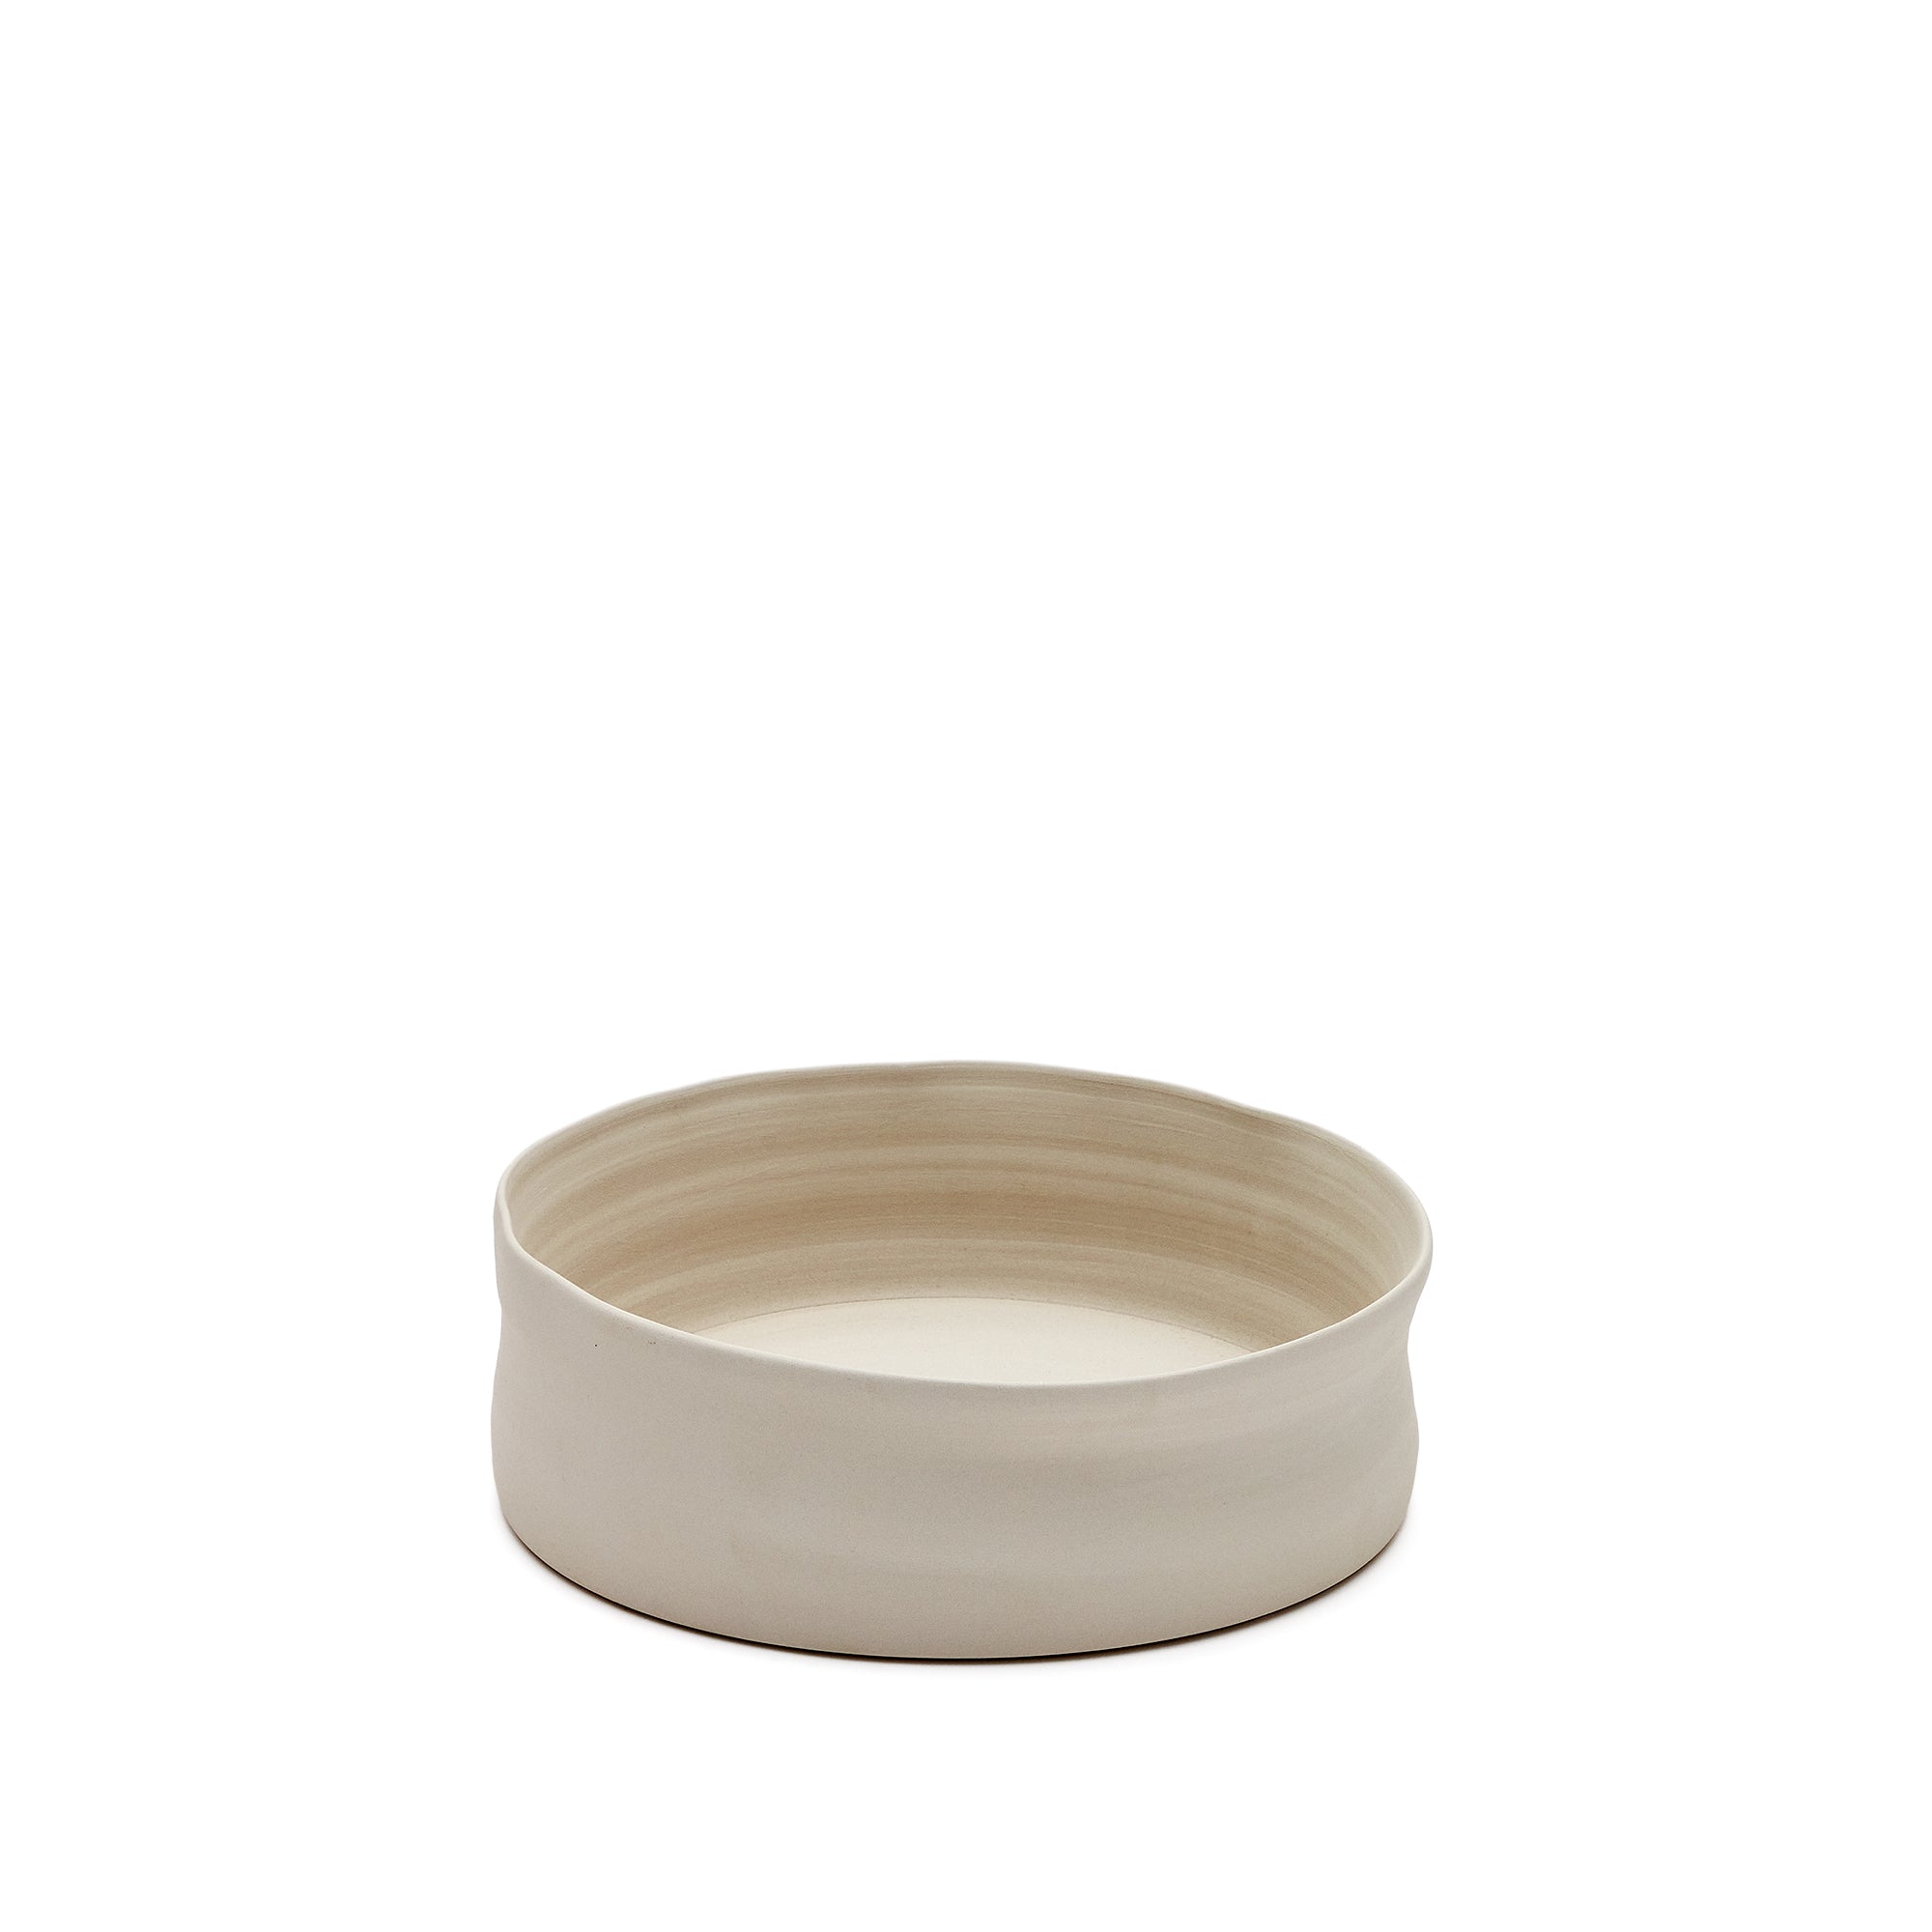 Macae medium white ceramic centrepiece Ø 24 cm